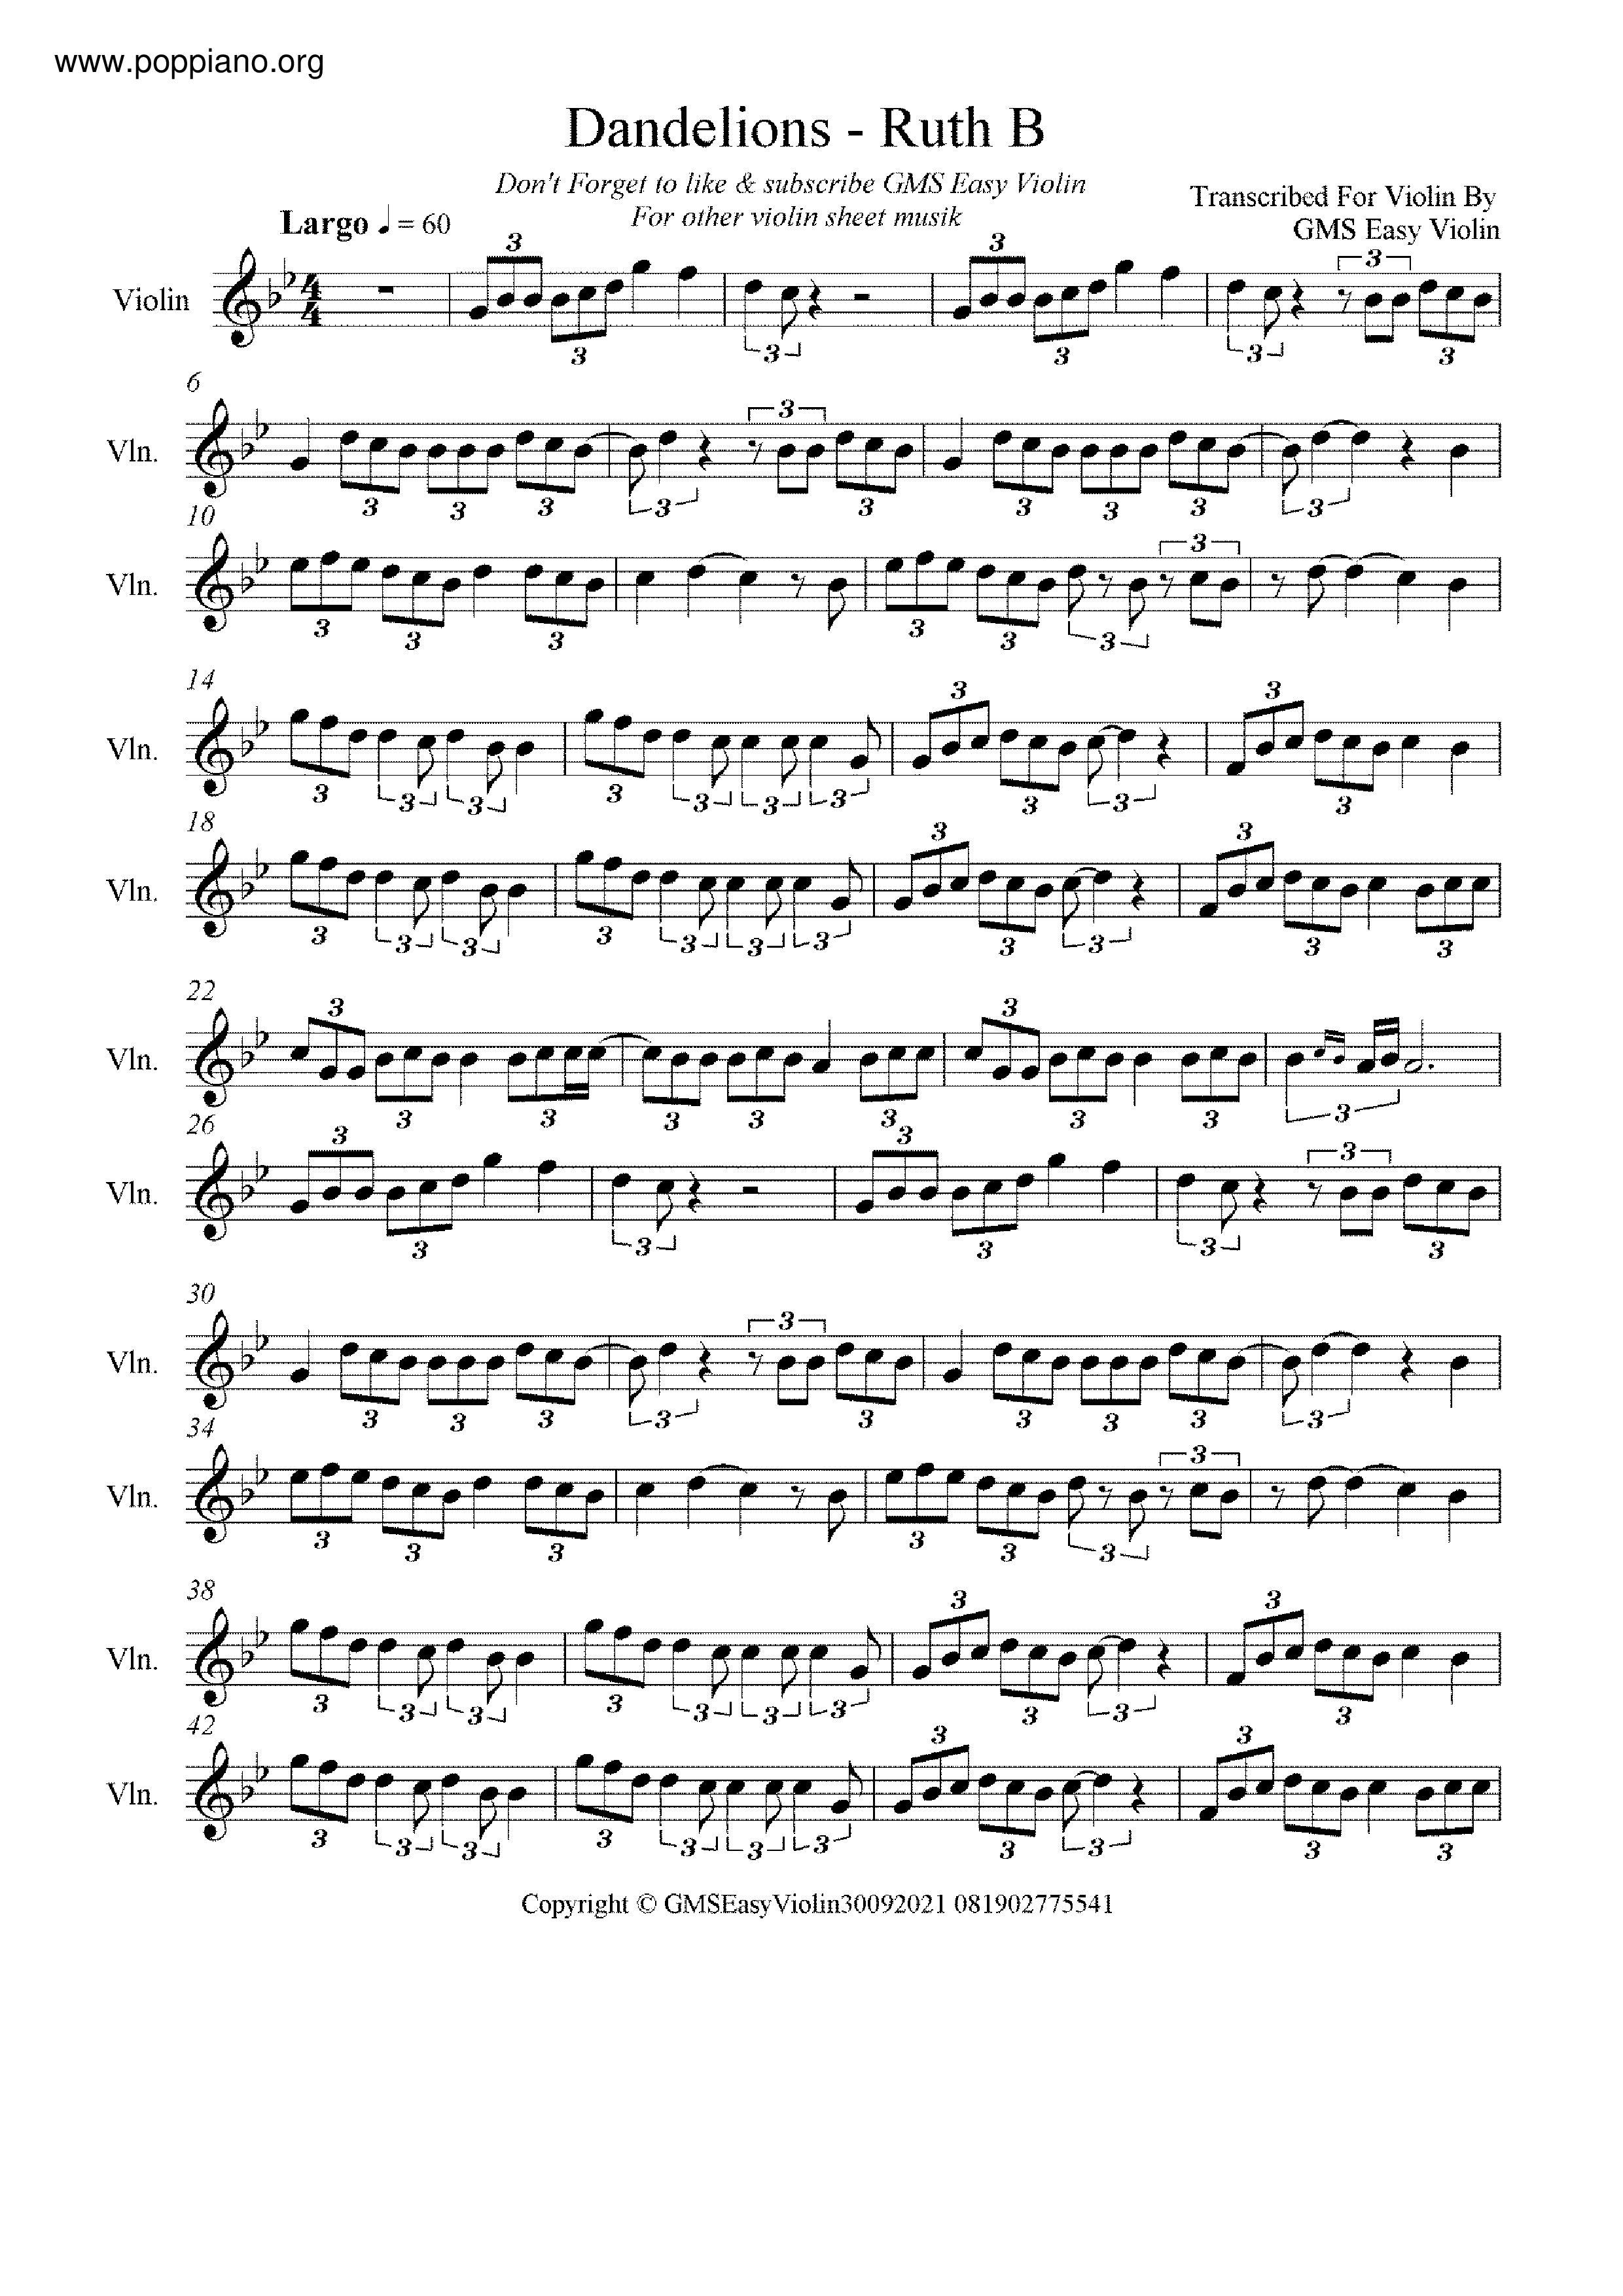 Dandelions琴譜